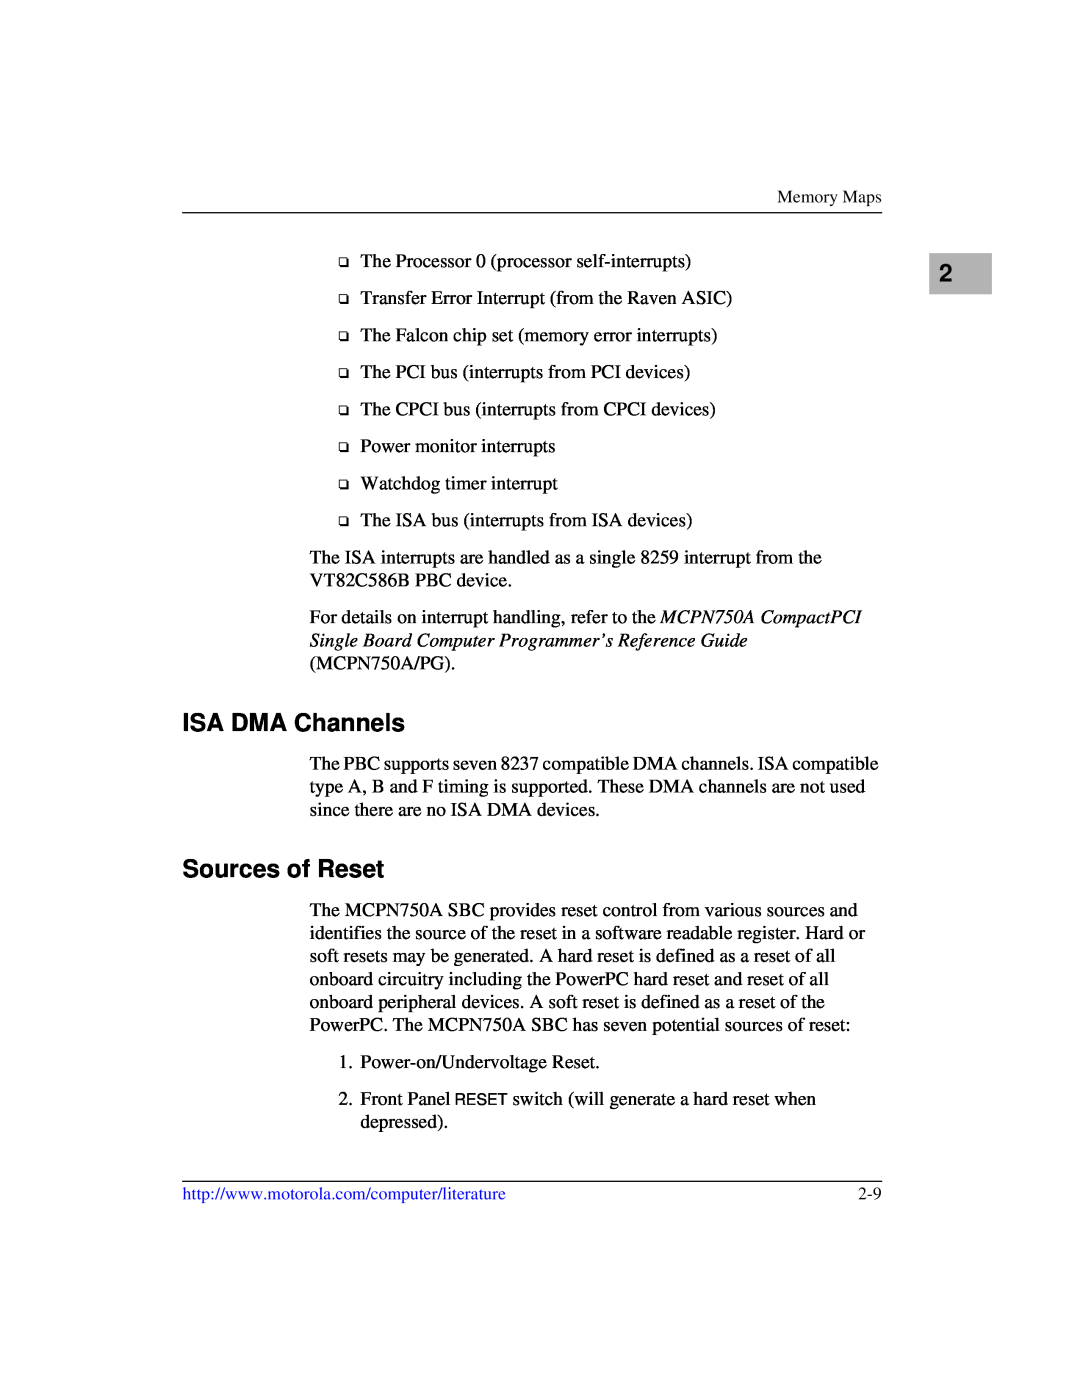 Motorola IH5, MCPN750A manual ISA DMA Channels, Sources of Reset 